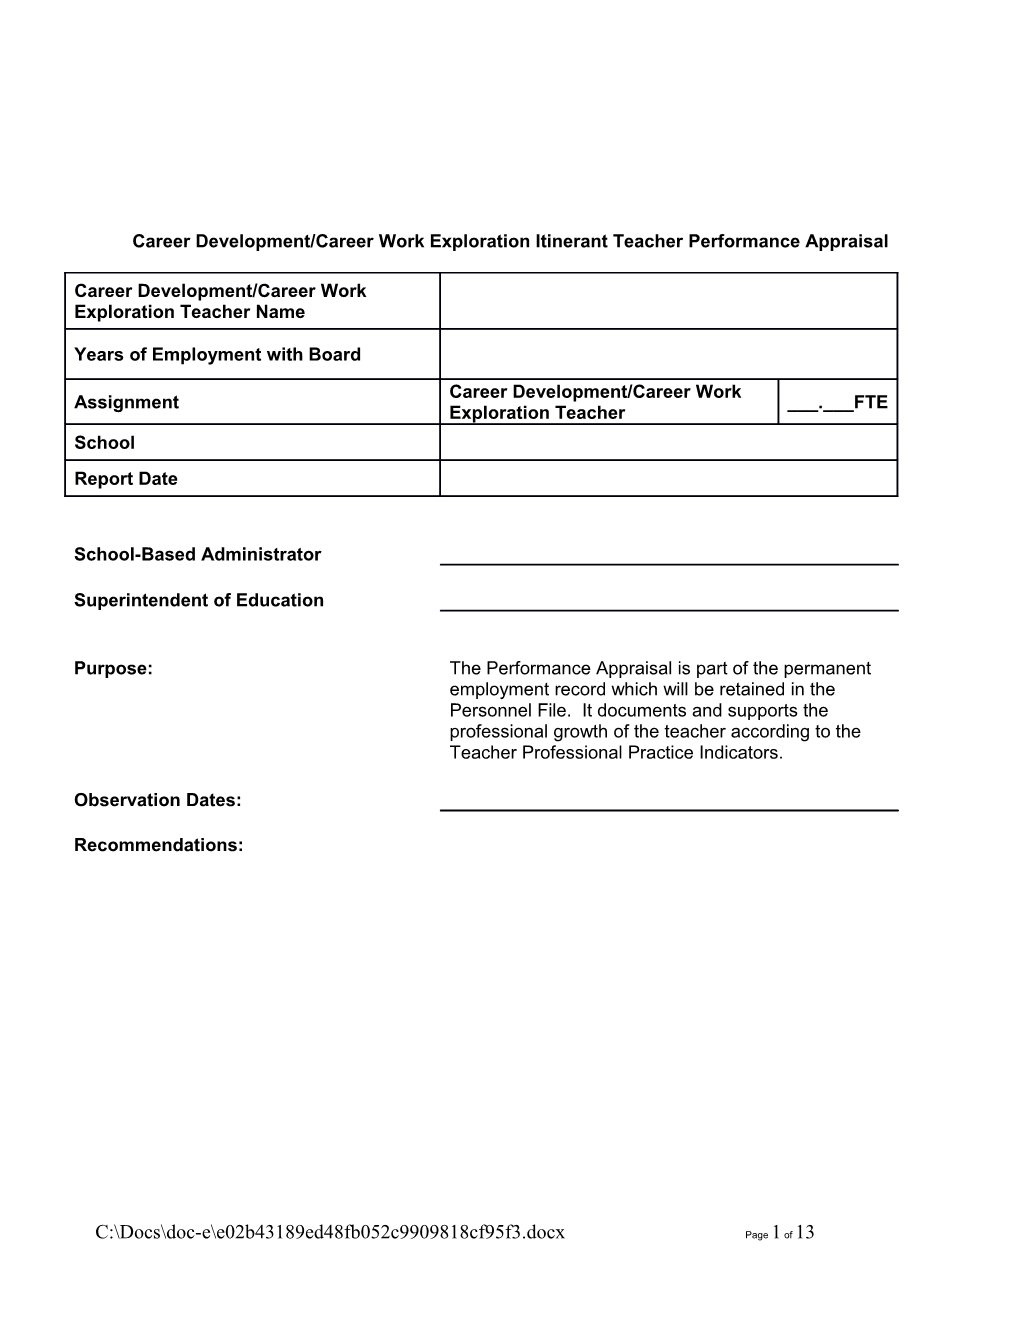 Career Development/Career Work Exploration Itinerant Teacherperformance Appraisal